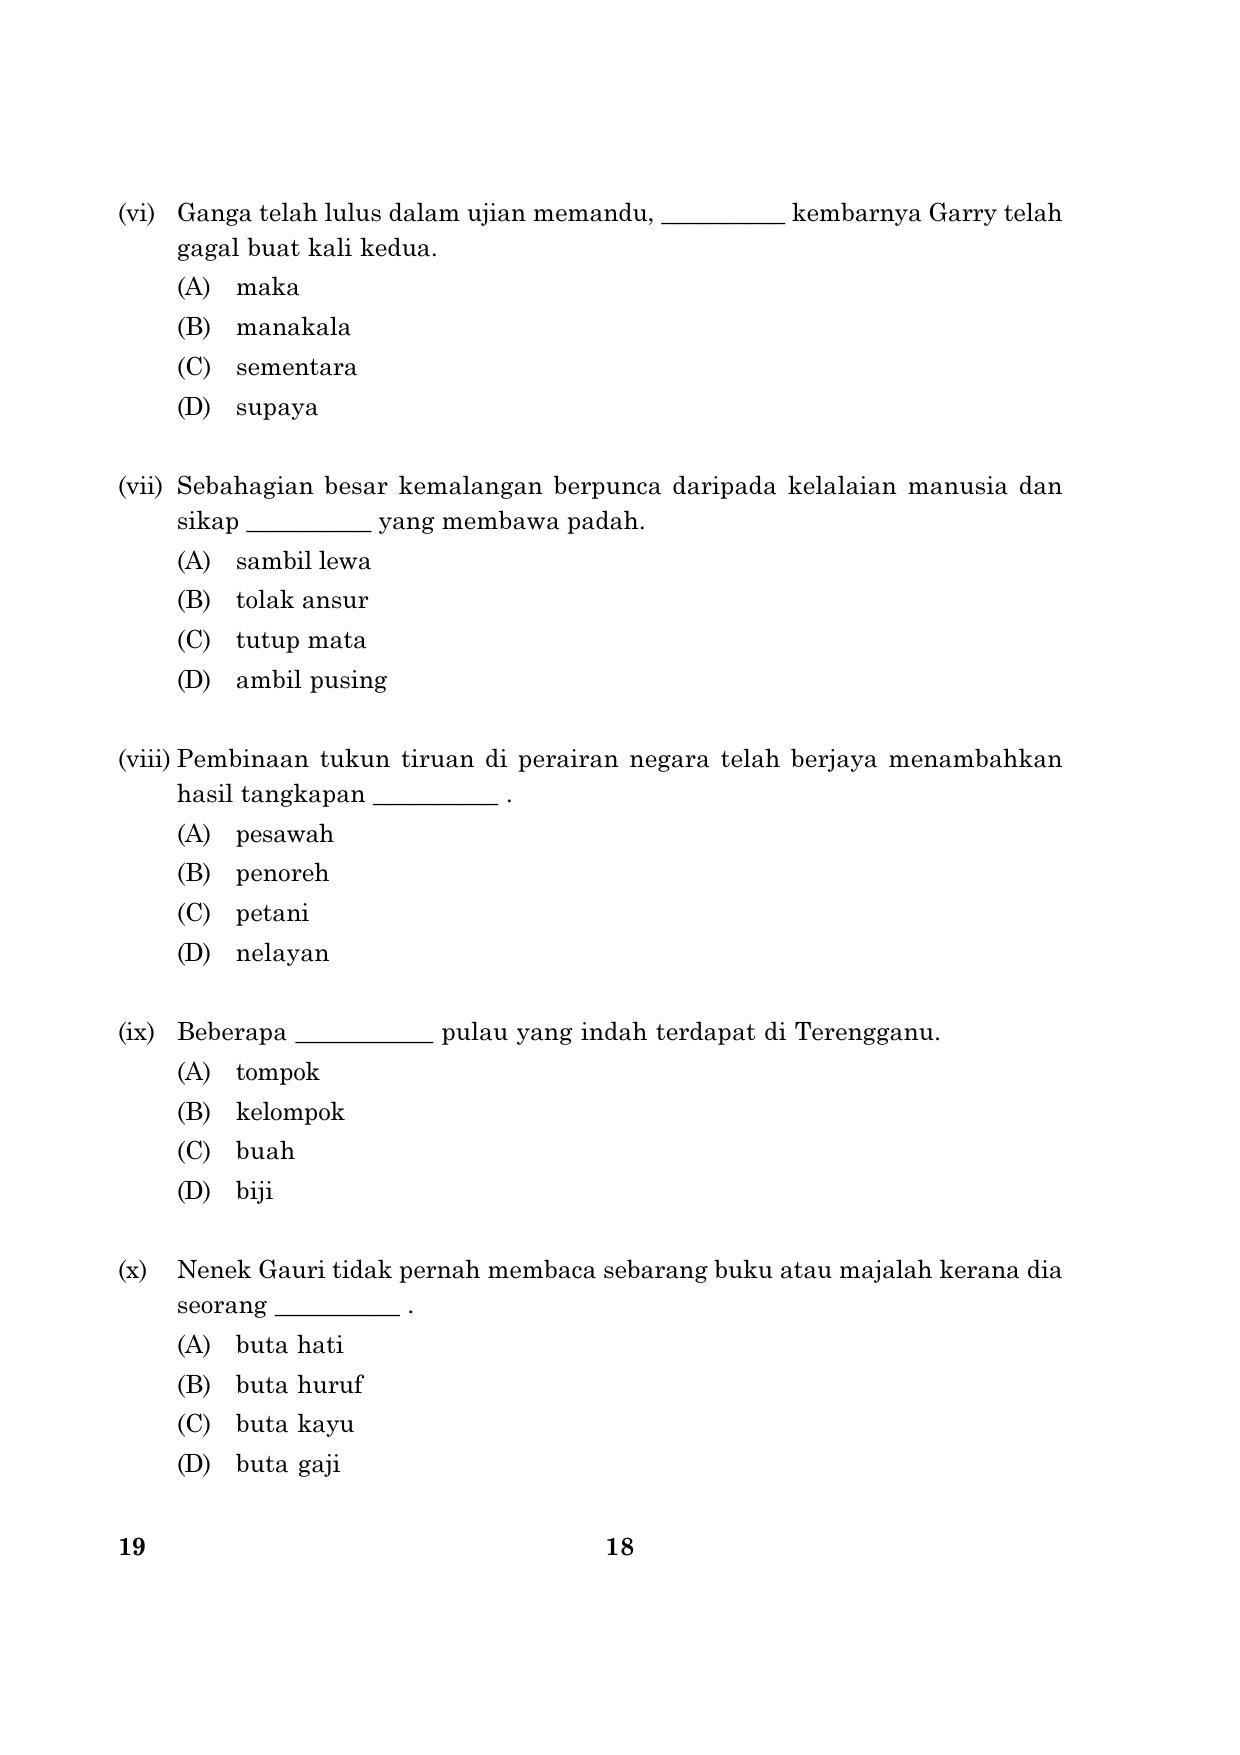 CBSE Class 10 019 Bahasamelayu English 2016 Question Paper - Page 18